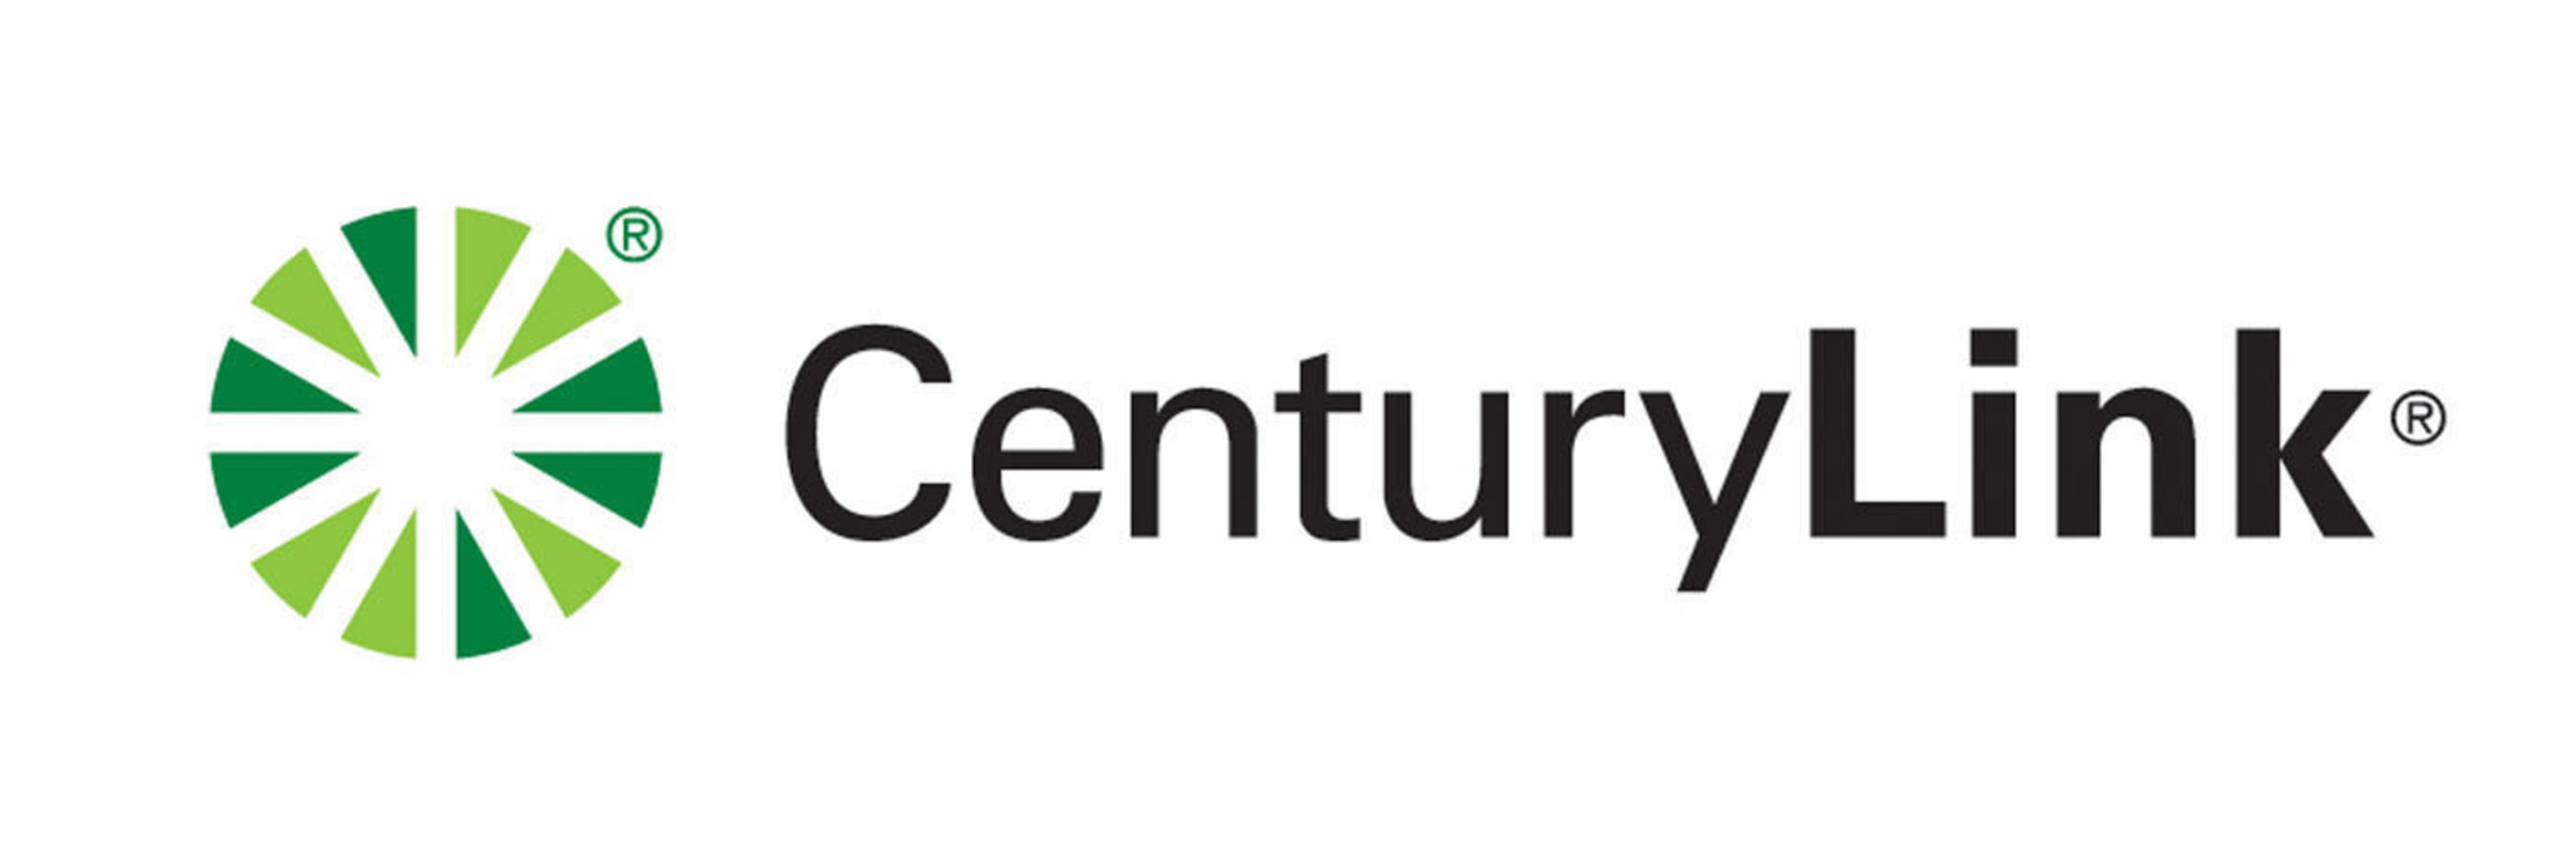 CenturyLink logo.